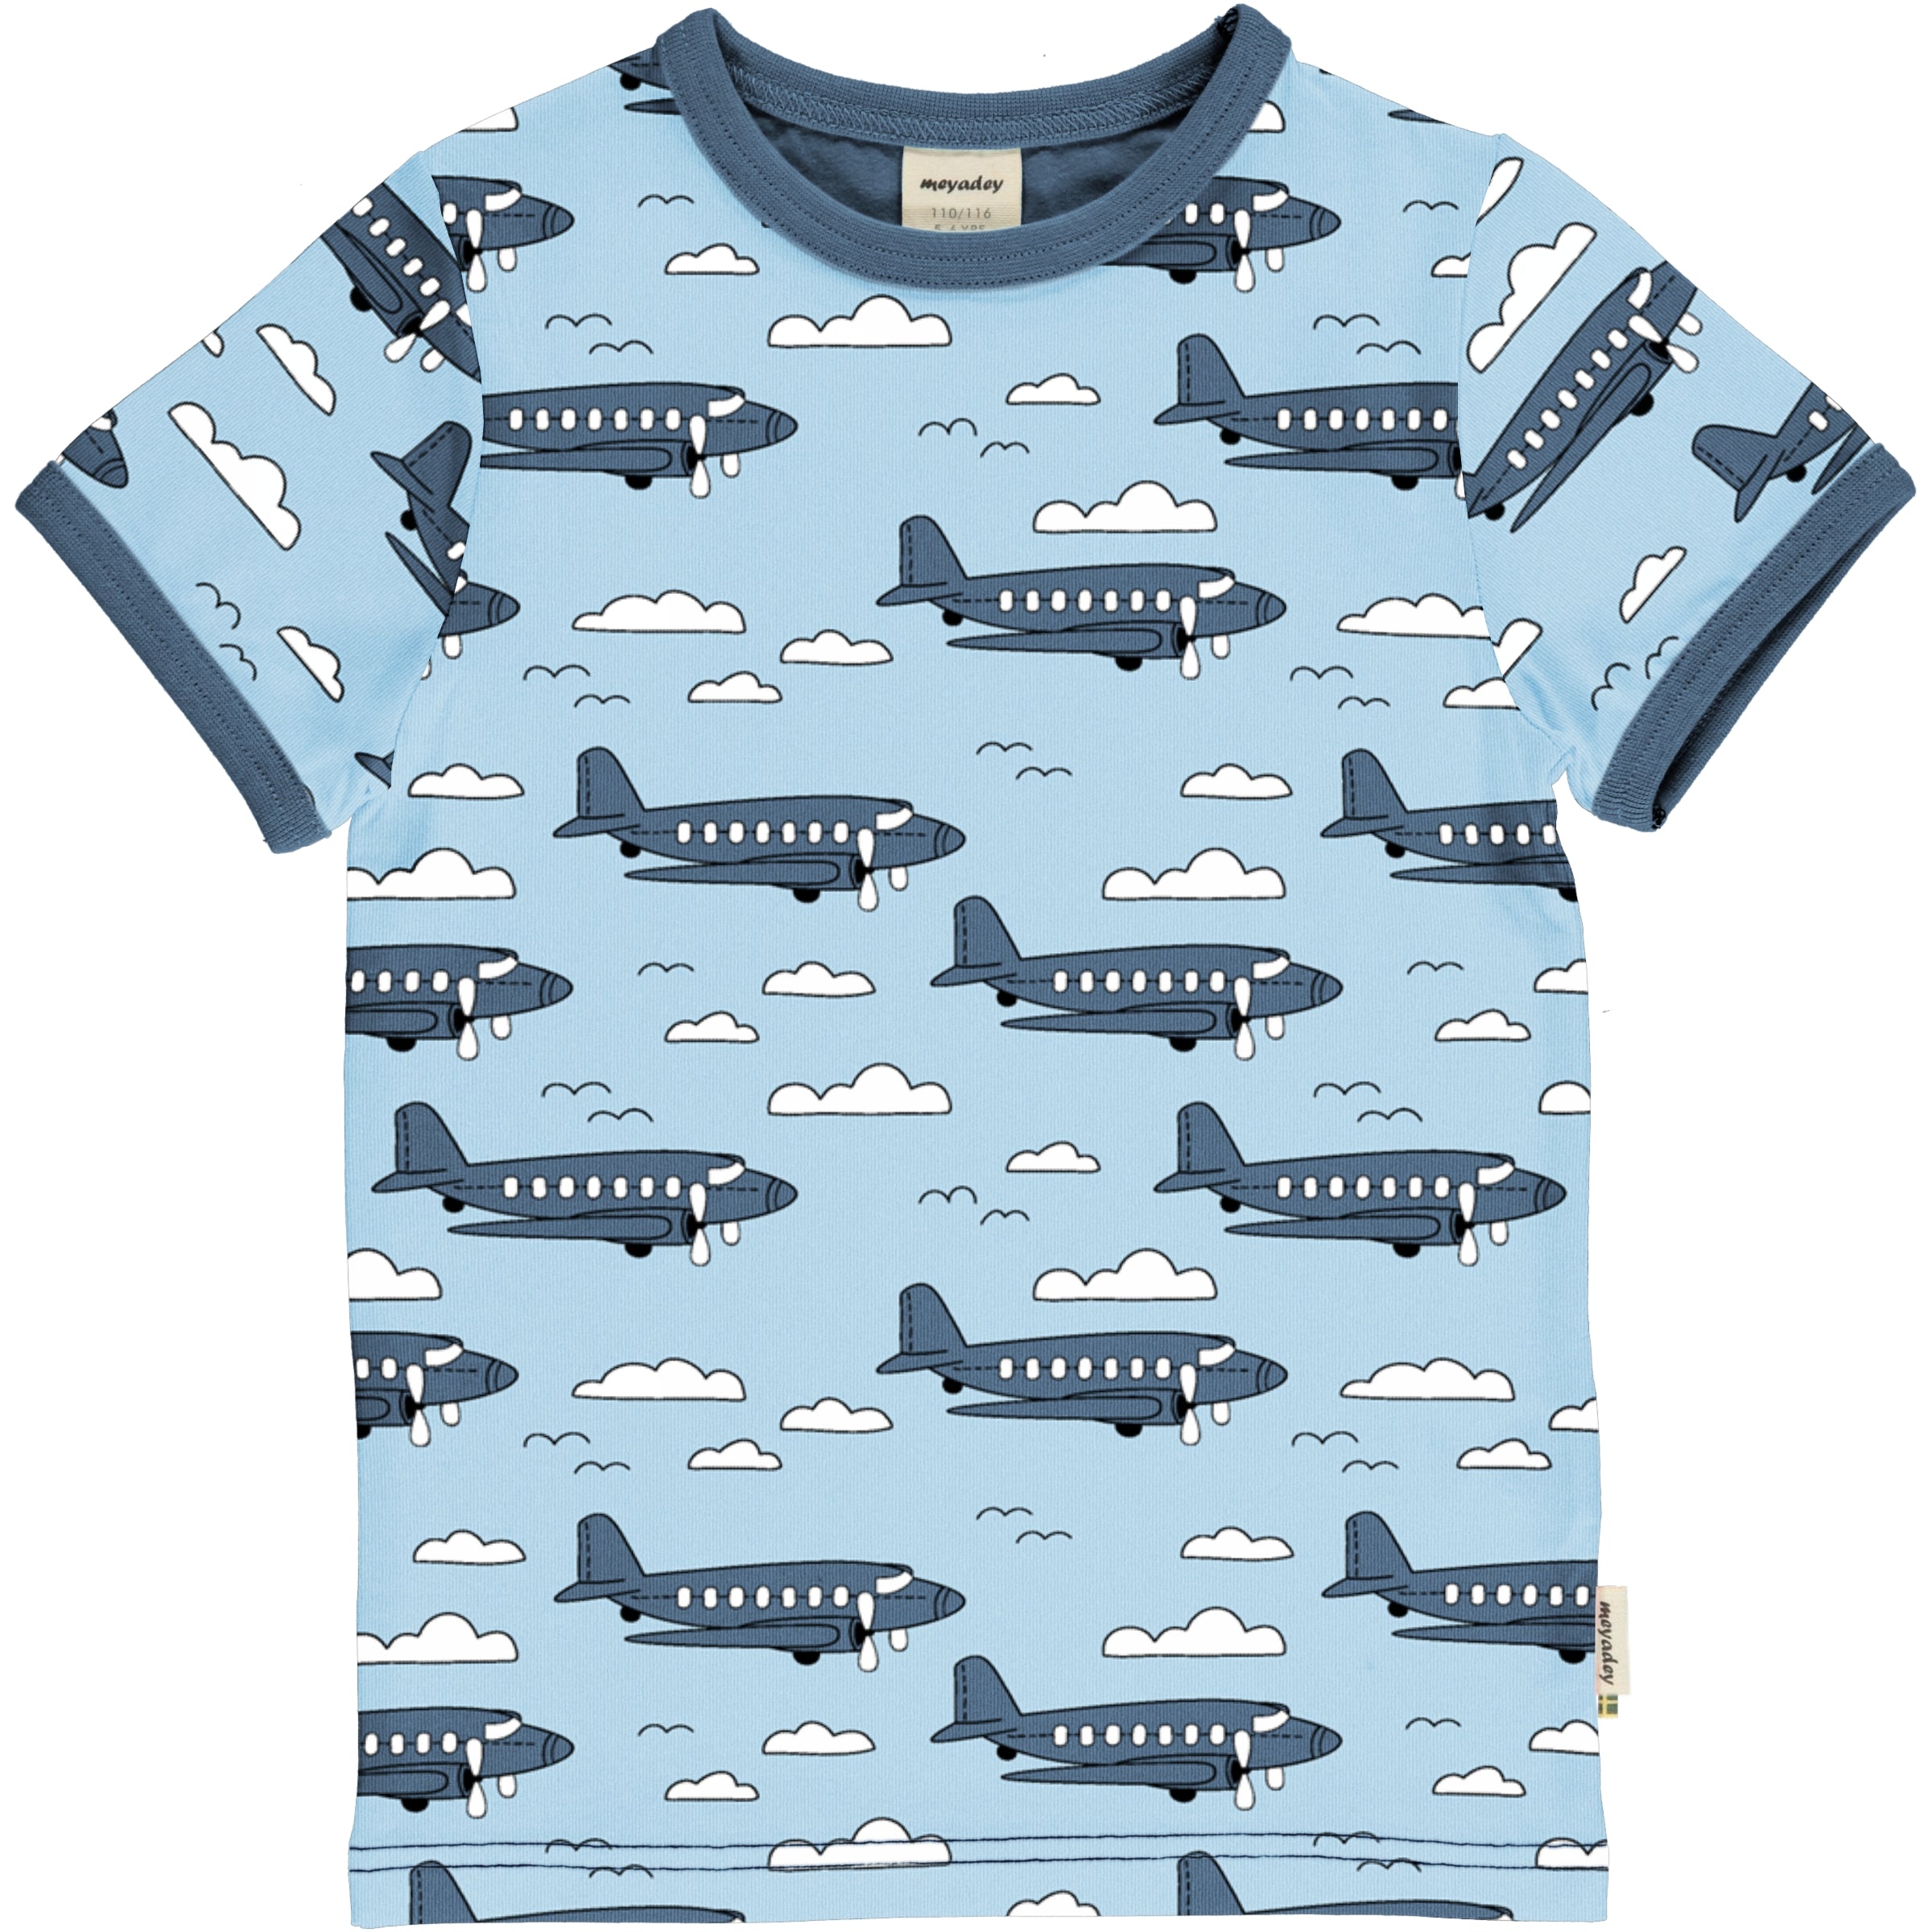 T-shirt Airoplane - Meyadey (Maxomorra)